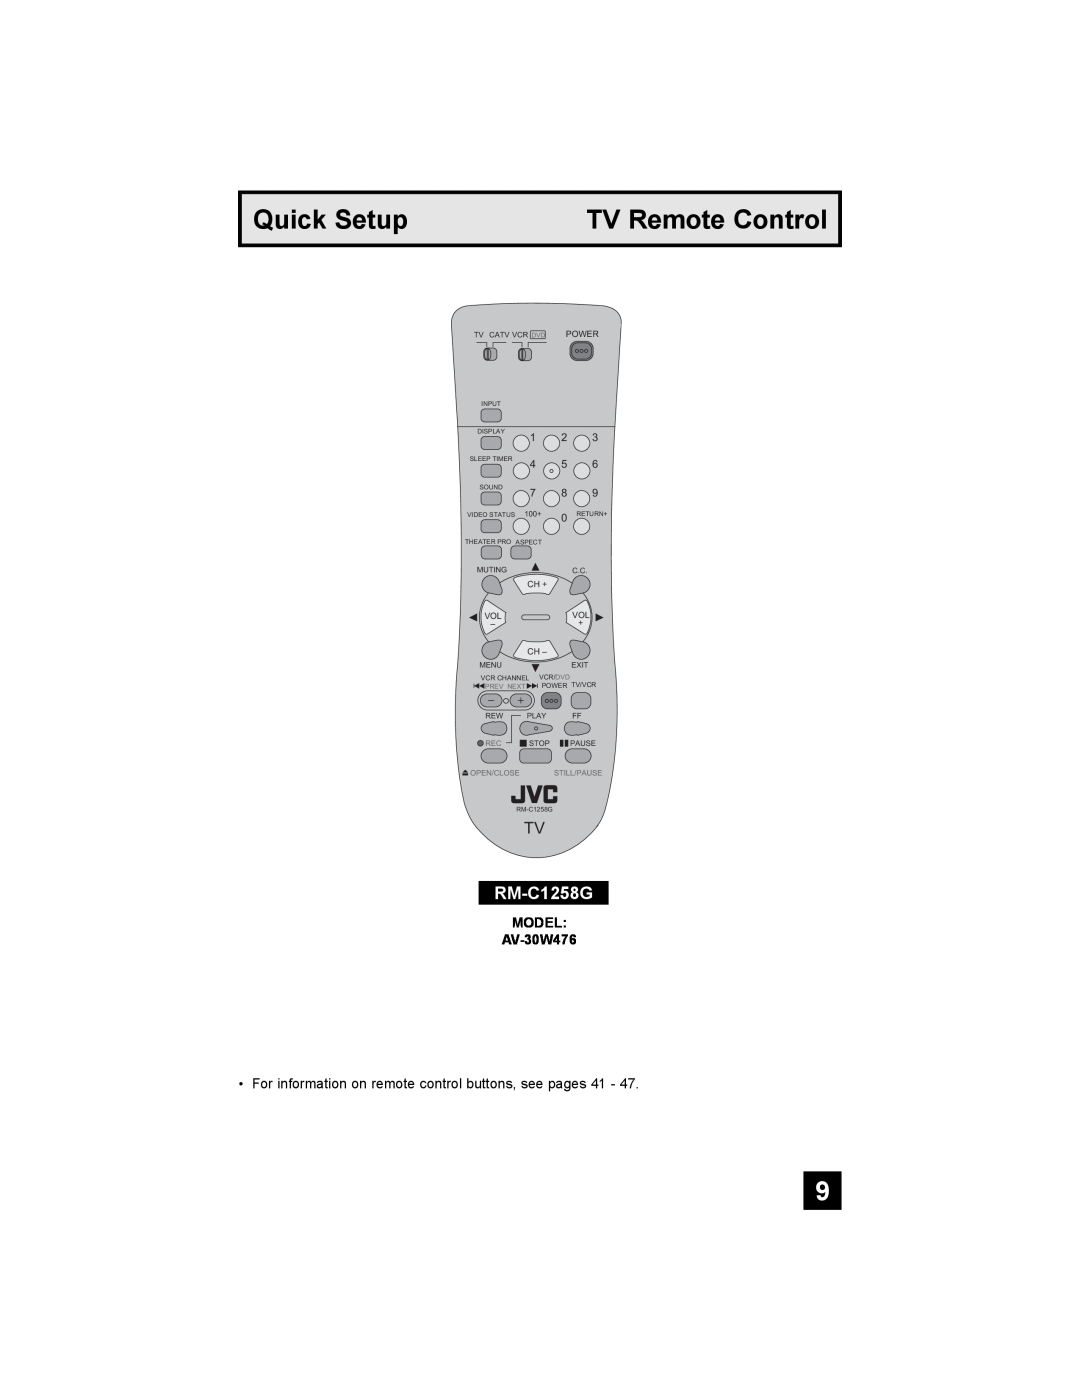 JVC AV 30W476 manual TV Remote Control, RM-C1258G, Quick Setup, Open/Close, Input, Display, Sleep Timer, VIDEO STATUS 100+ 